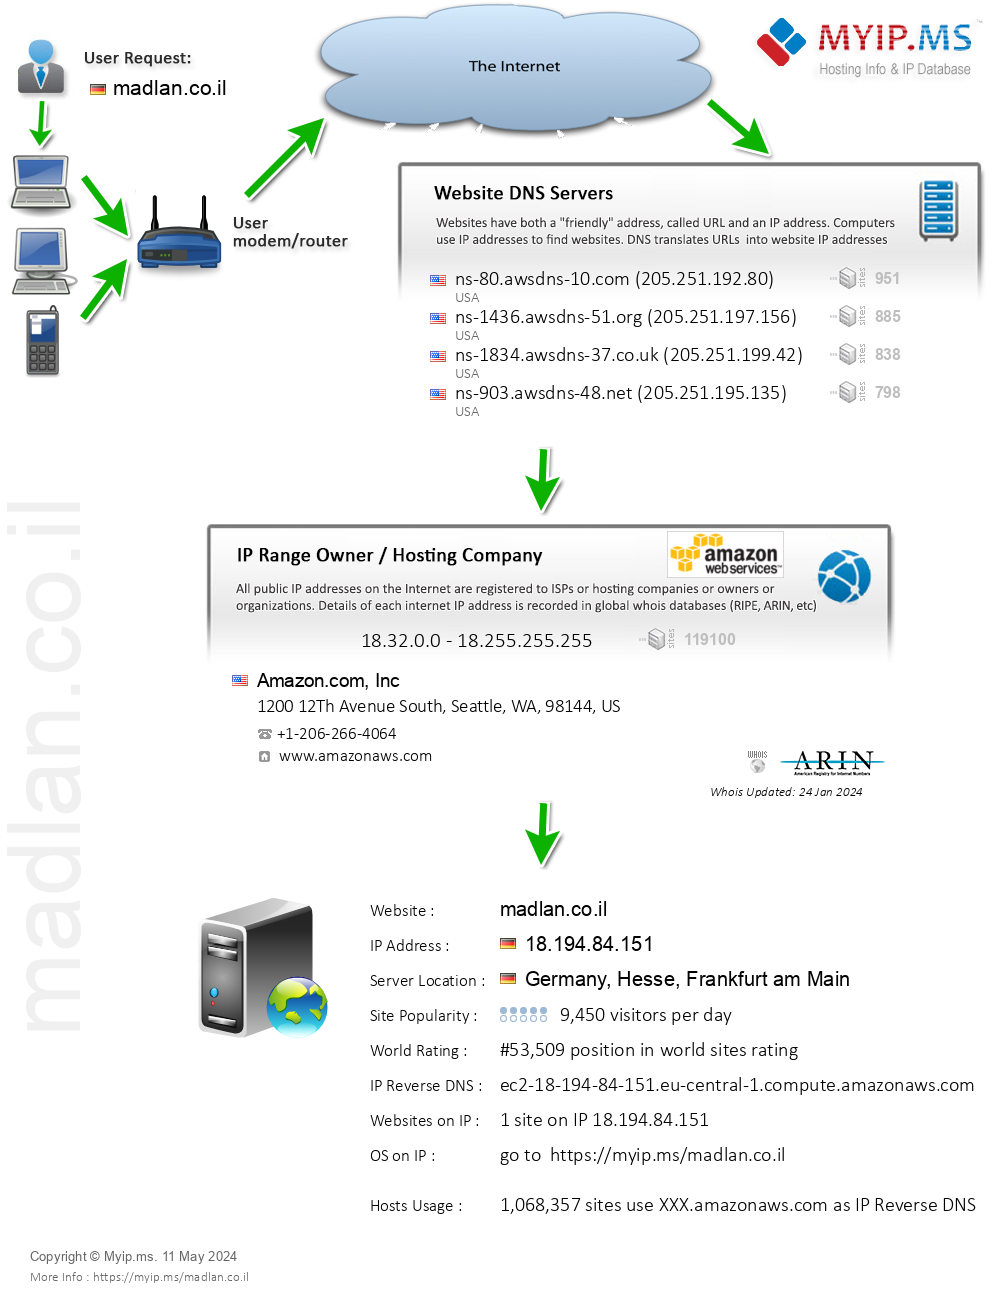 Madlan.co.il - Website Hosting Visual IP Diagram